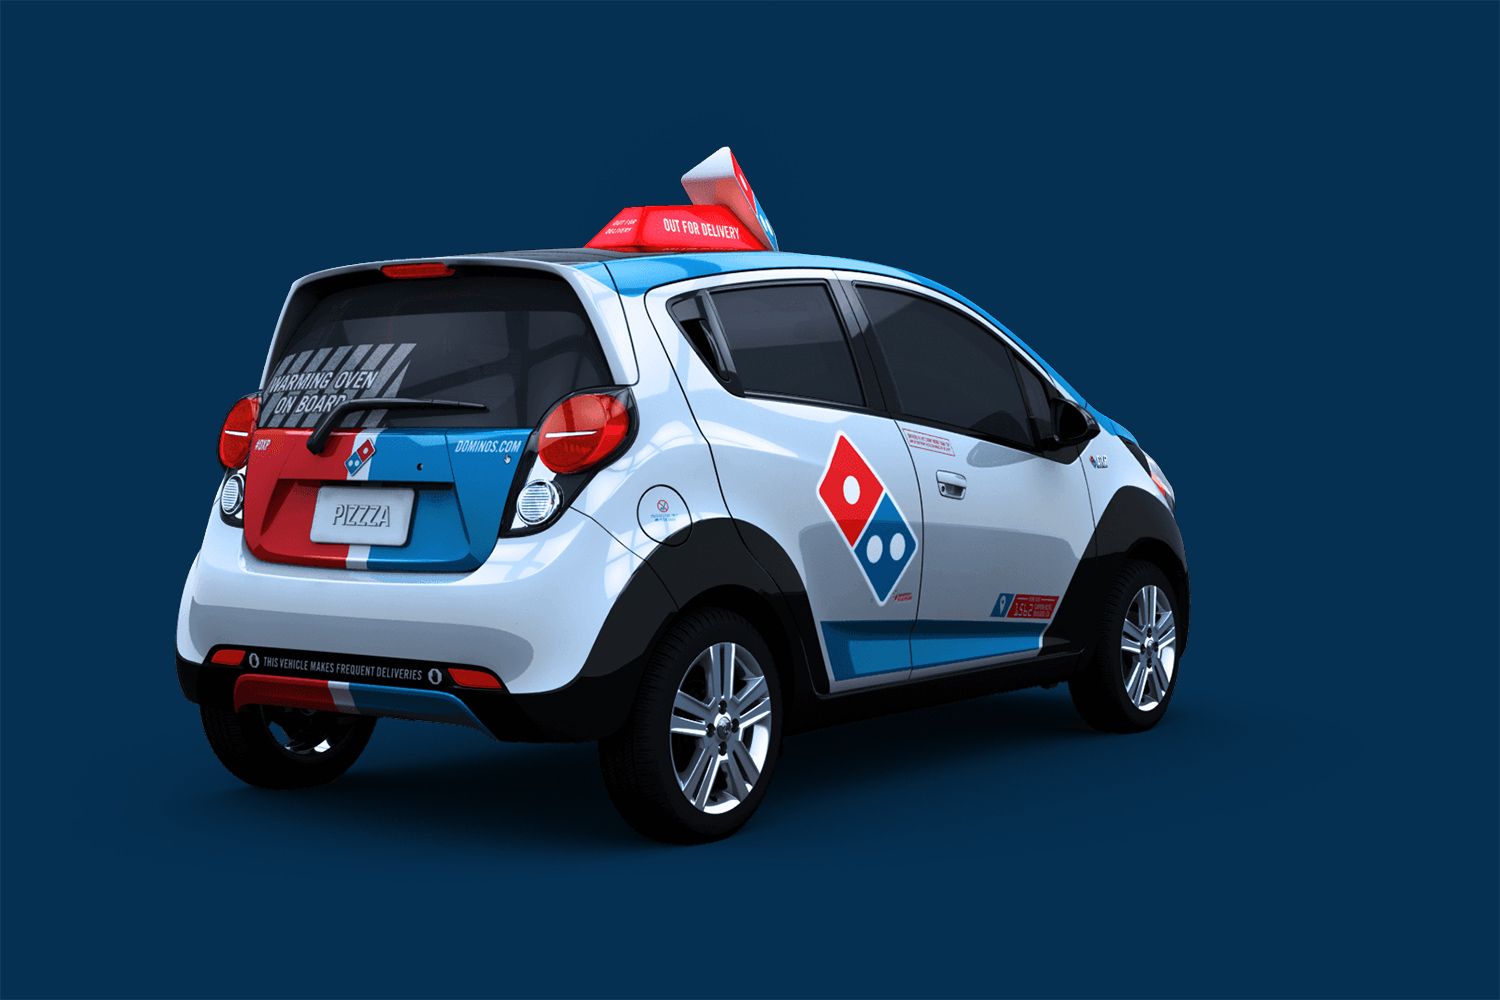 dominos innovative dxp chevrolet spark pizza delivery car 5